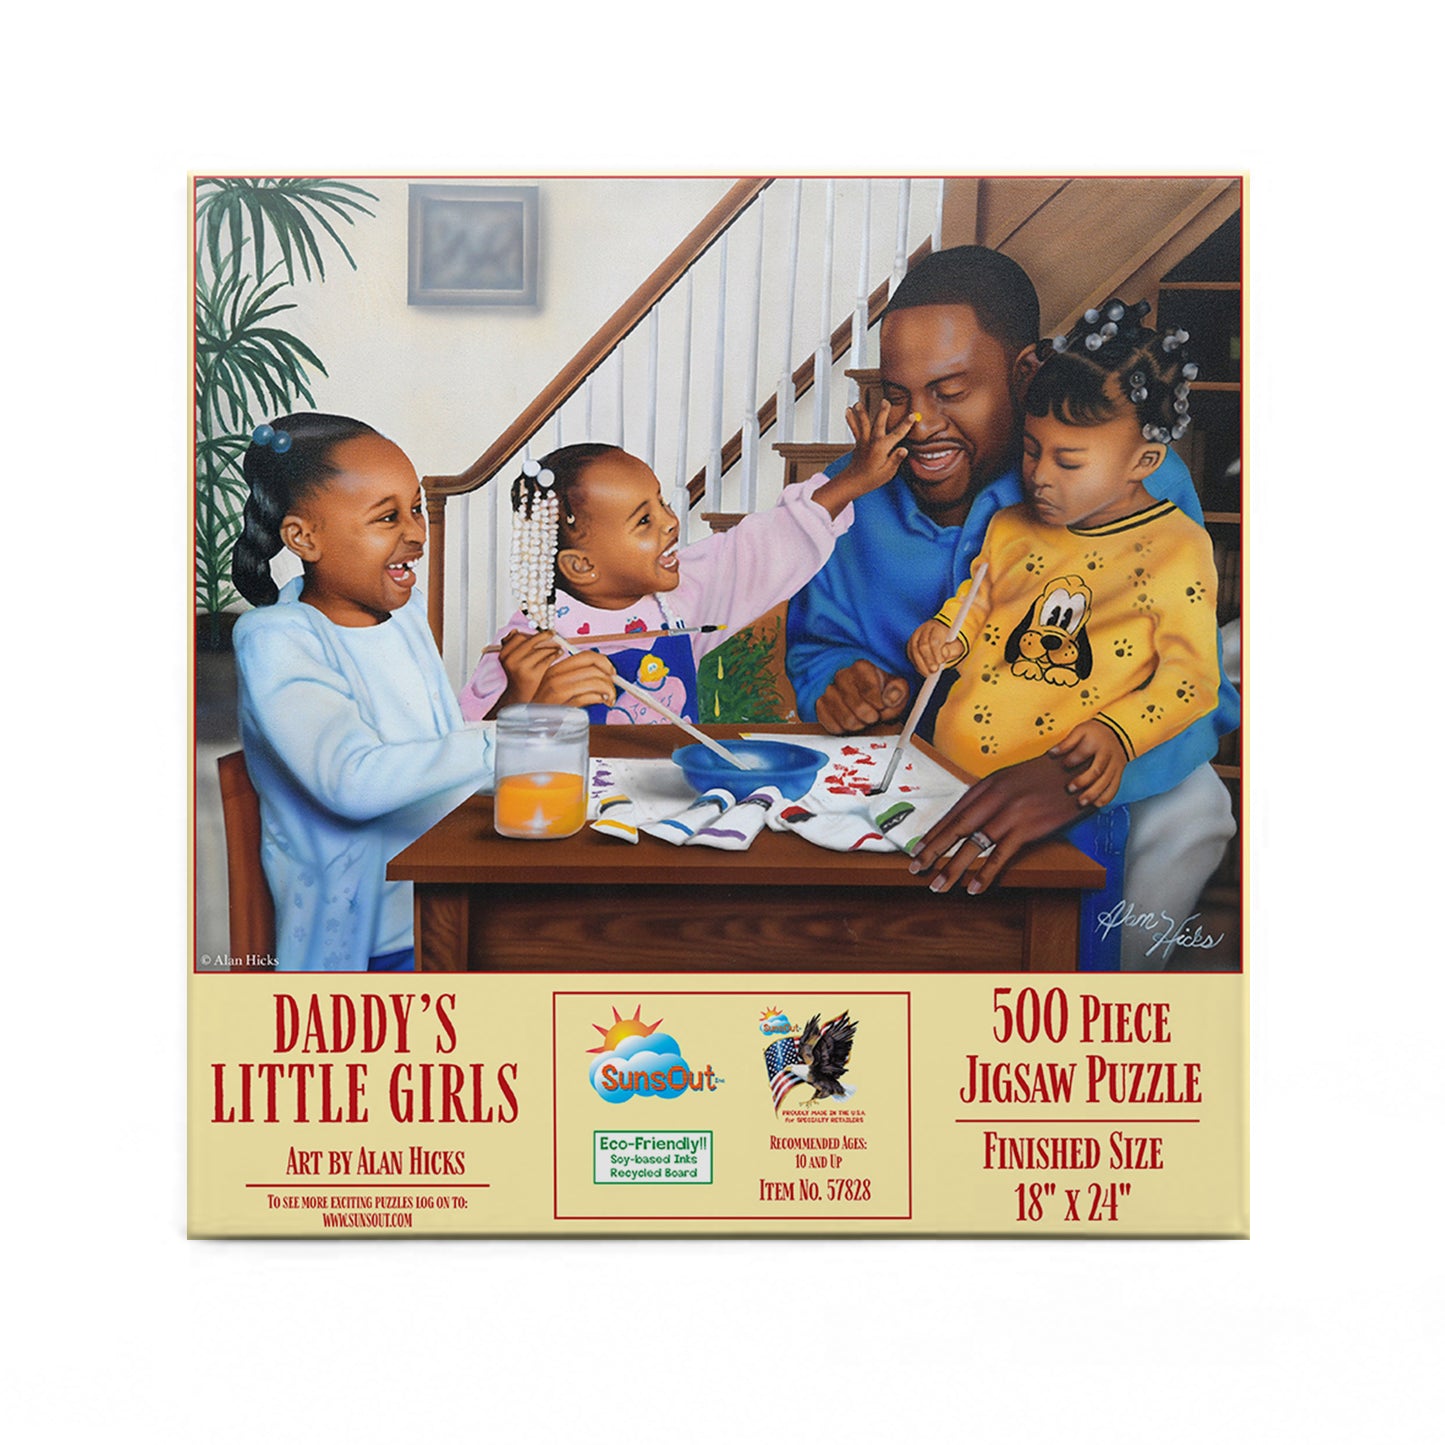 Daddy's Little Girls - 500 Piece Jigsaw Puzzle